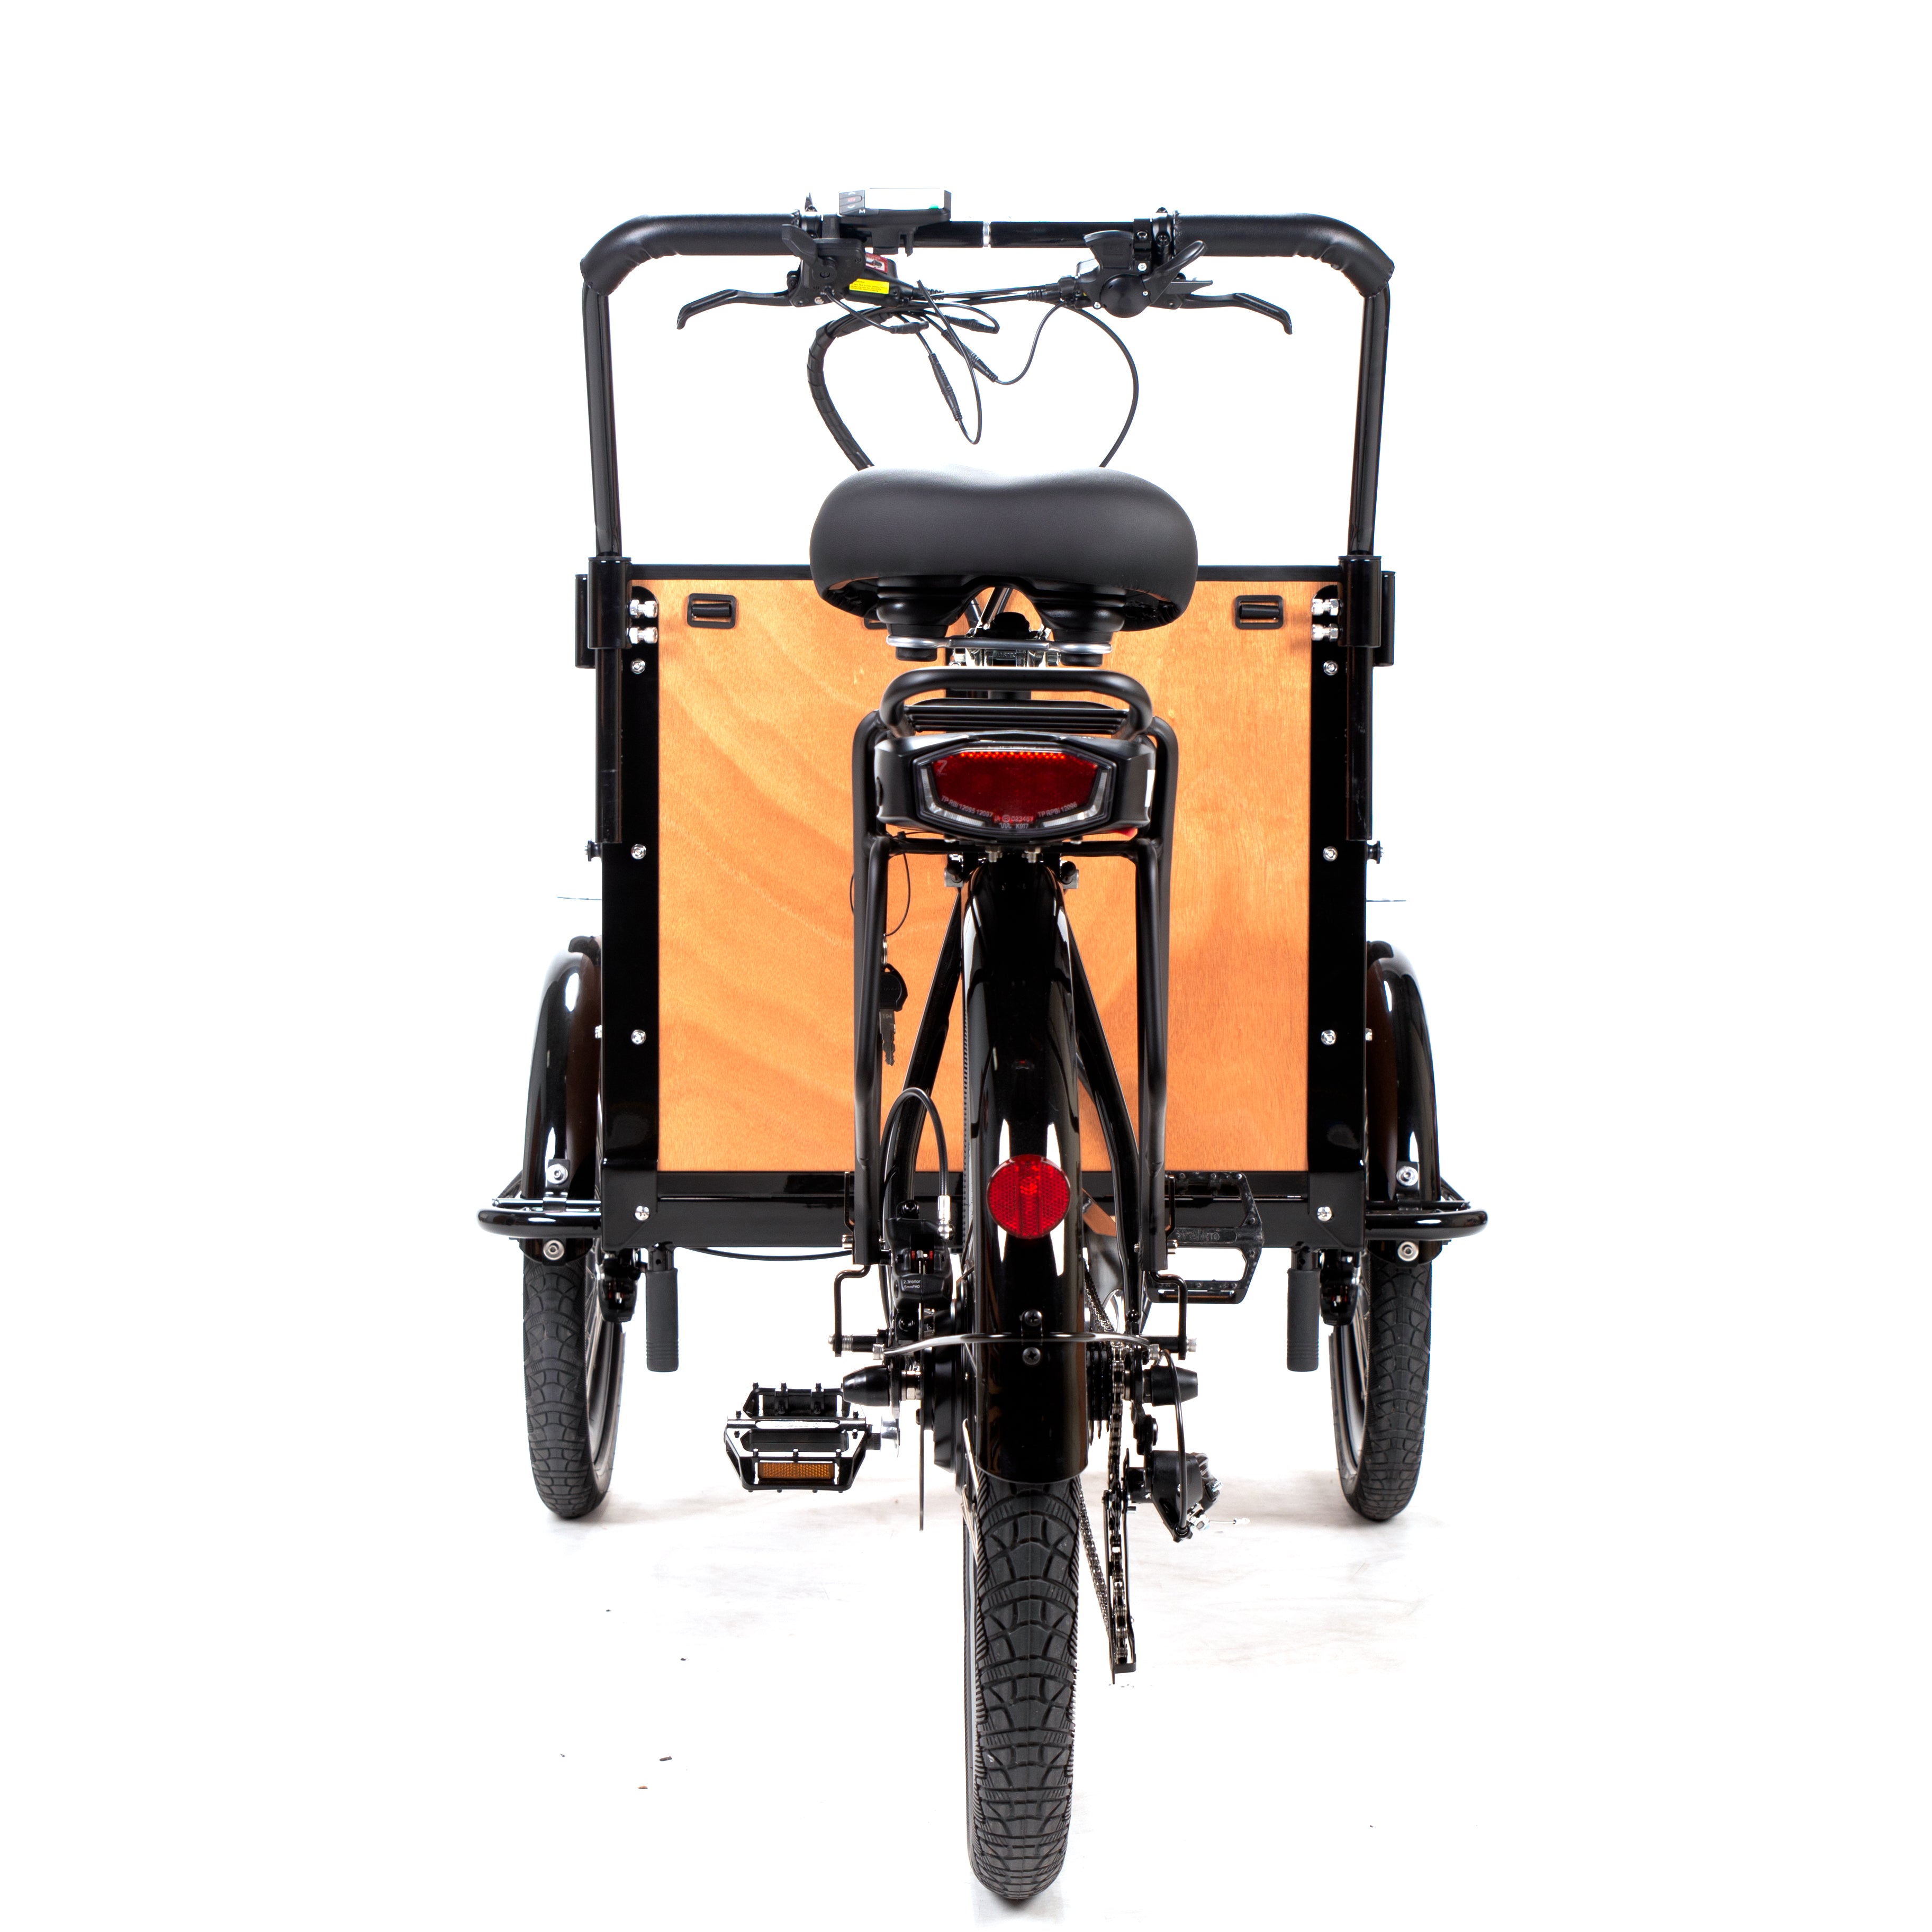 K9 Bunch Bike #color_Honey Woodgrain